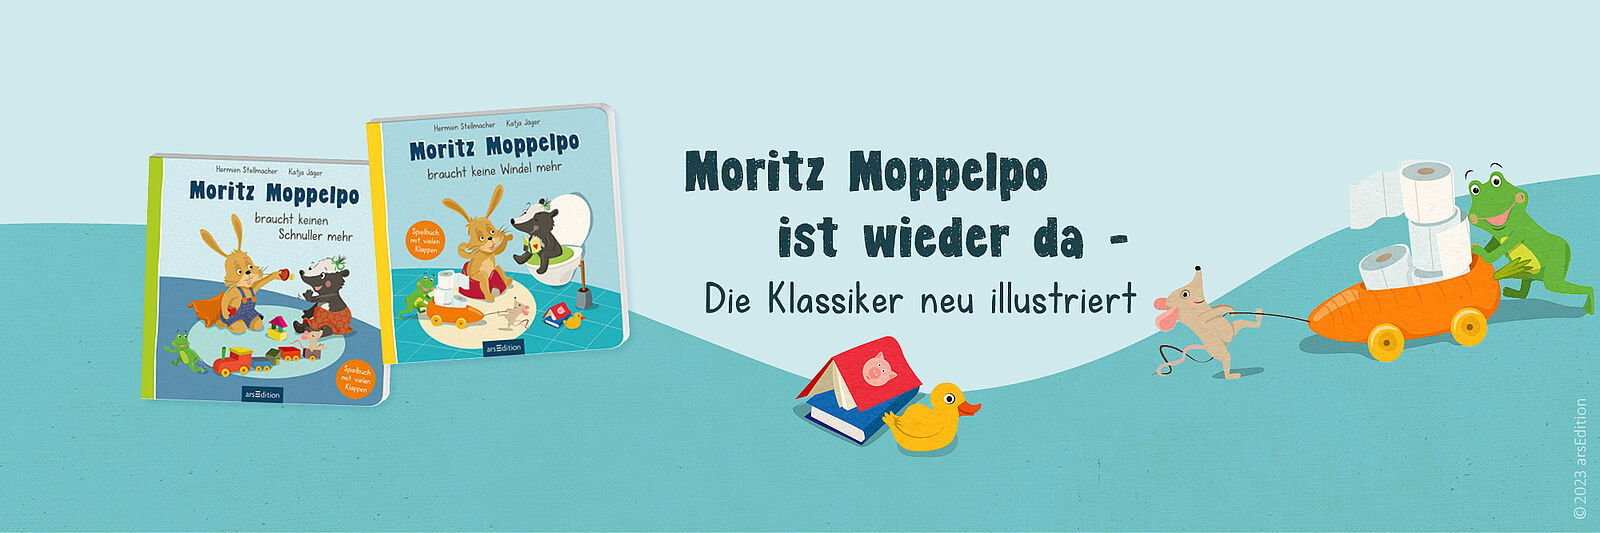 Moritz Moppelpo